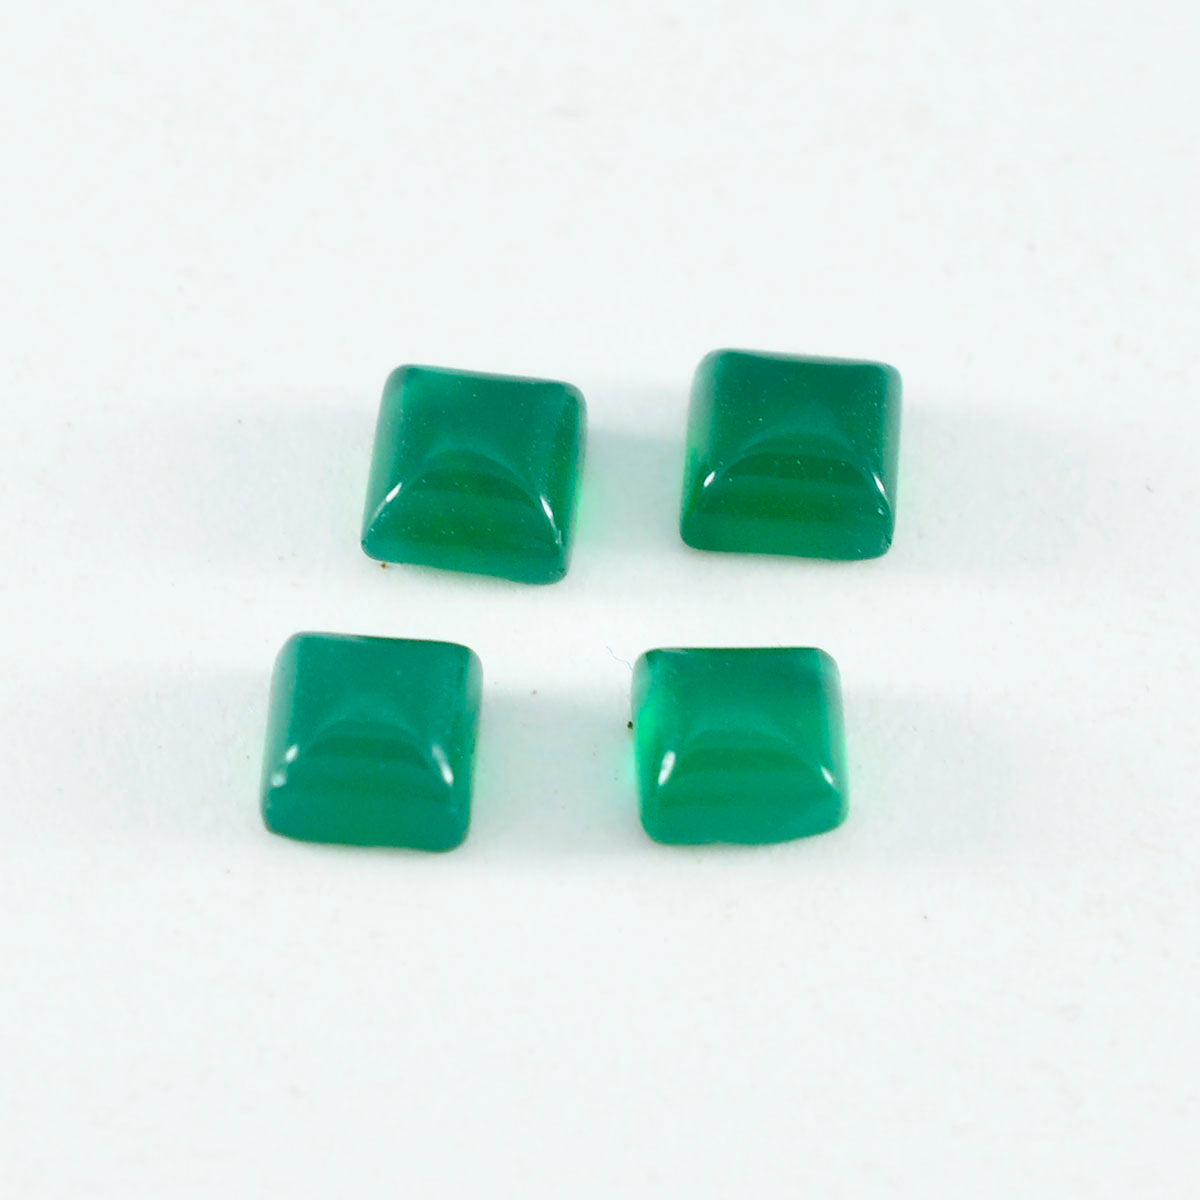 Riyogems 1PC Green Onyx Cabochon 6x6 mm Square Shape Good Quality Loose Gems